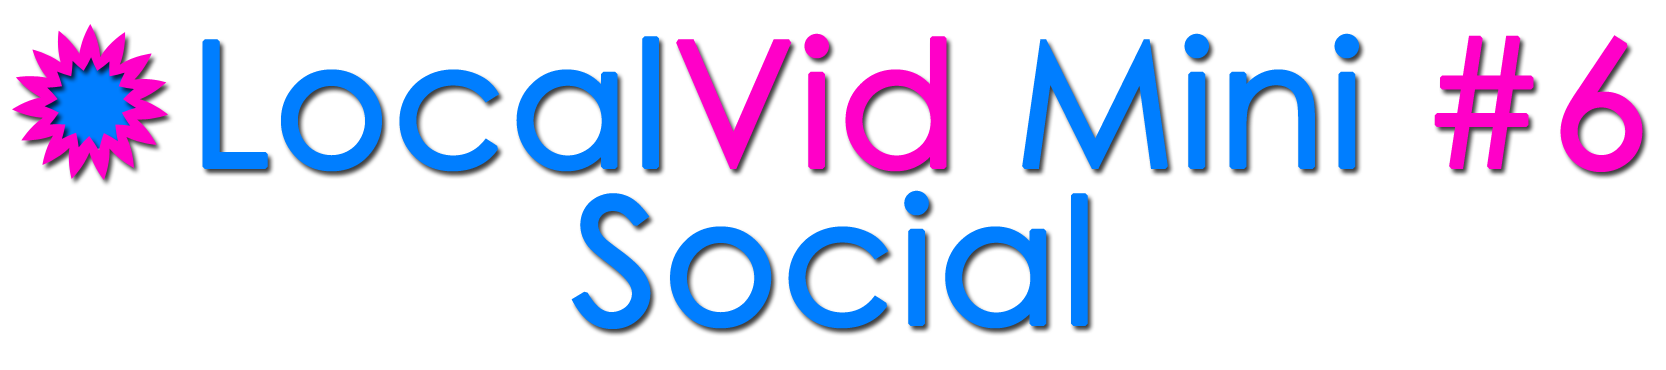 Logo Local Vid Mini Social 6